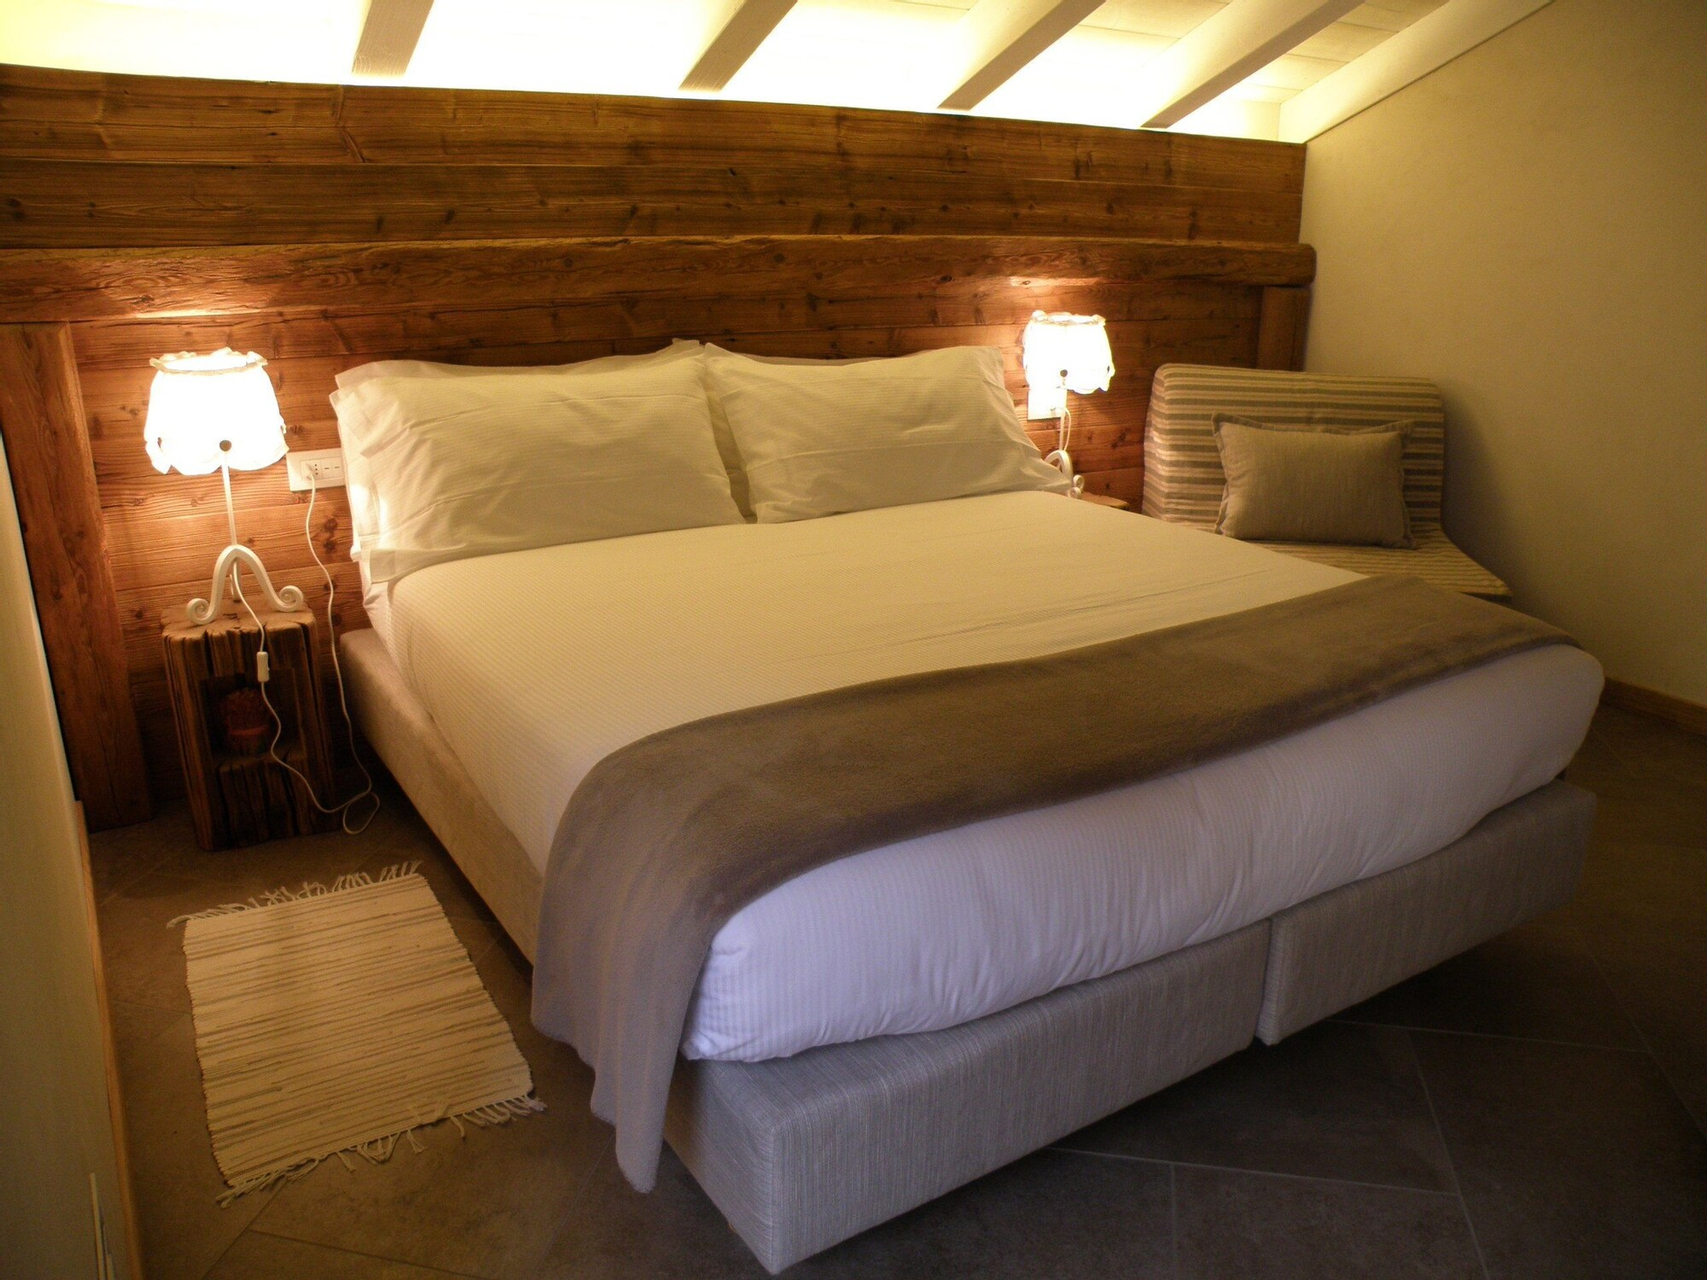 Bedroom, La Vita in Campagna, Sondrio